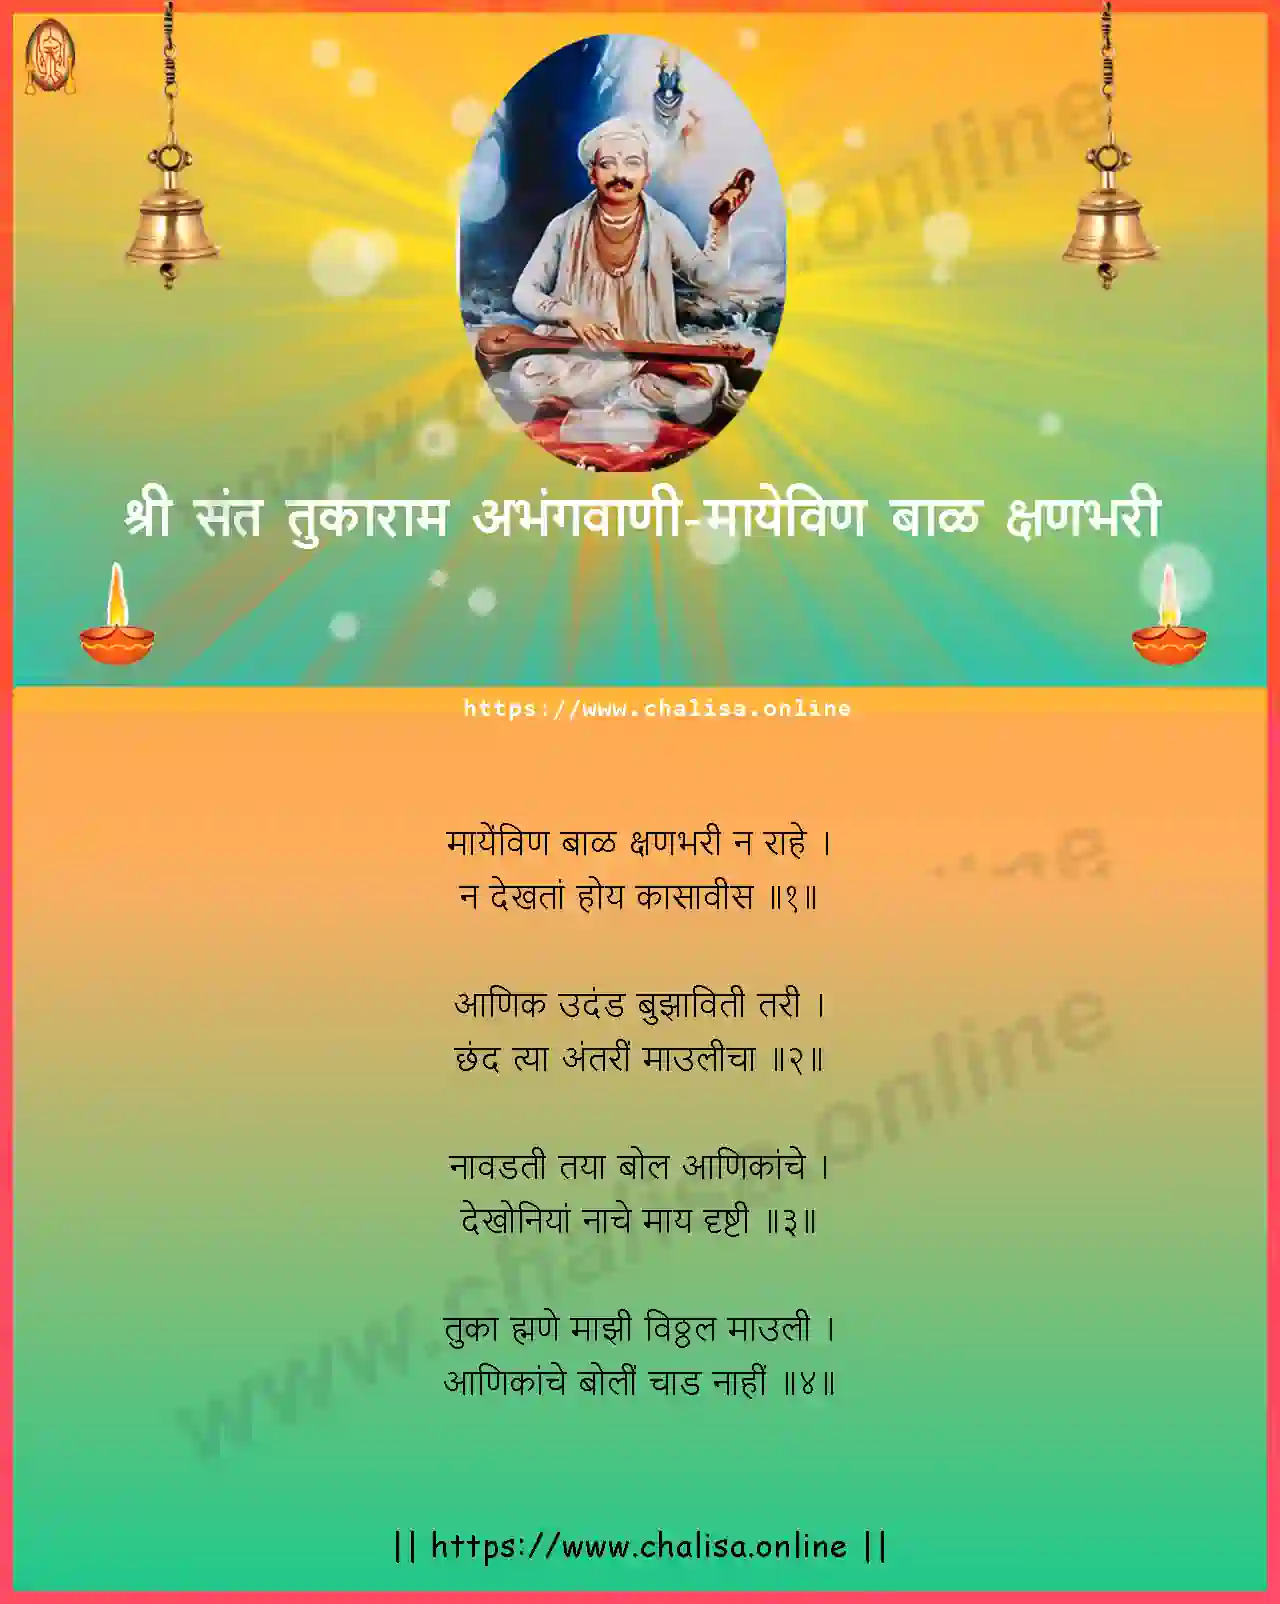 mayeveen-baal-kshanabhari-shri-sant-tukaram-abhang-marathi-lyrics-download